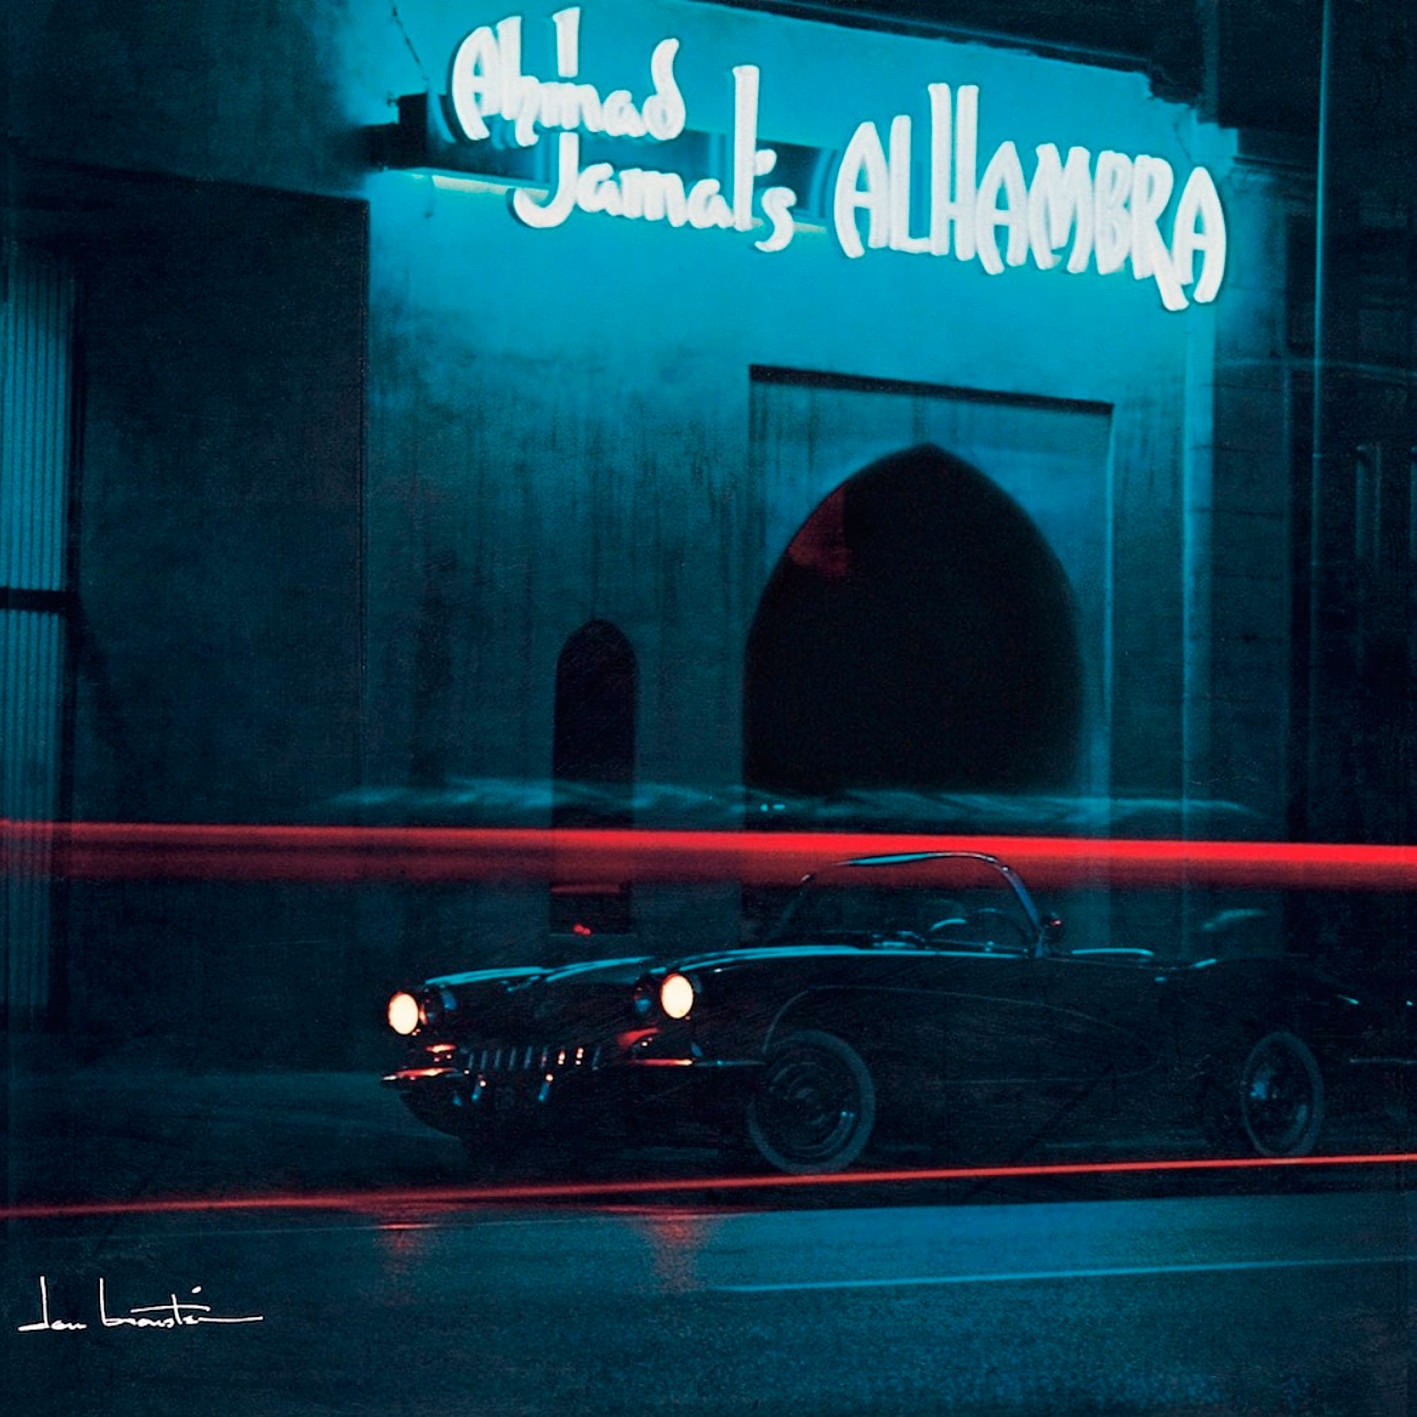 Ahmad Jamal - Ahmad Jamal’s Alhambra (1961/2013) [AcousticSounds DSF DSD64/2.82MHz + FLAC 24bit/88,2kHz]